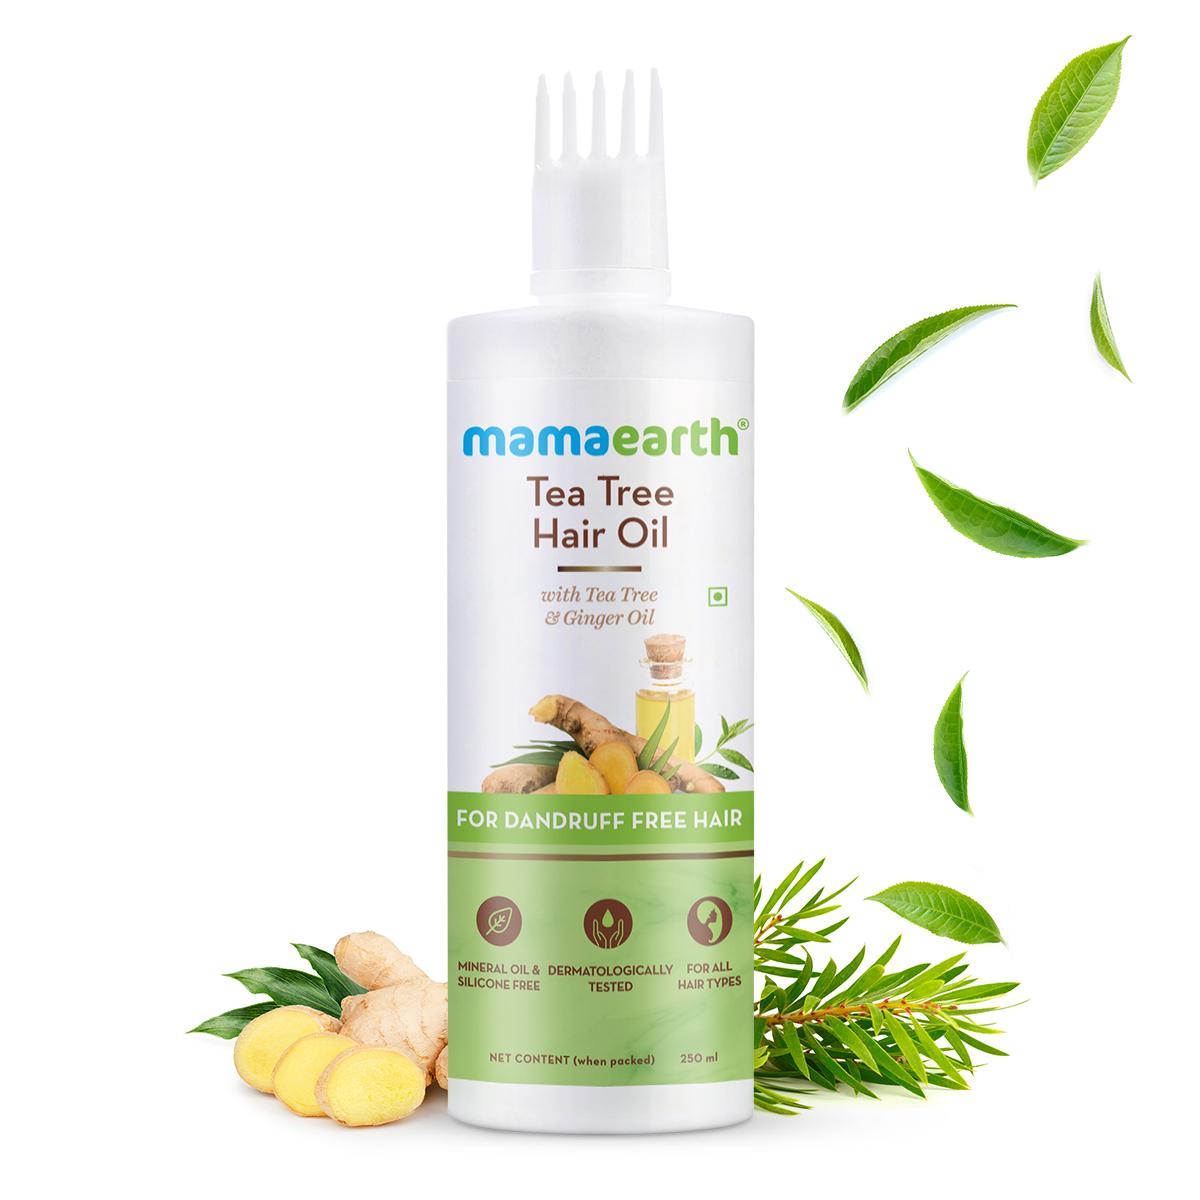 tea tree hair oil with tea tree and ginger oil for dandruff free hair - 250ml